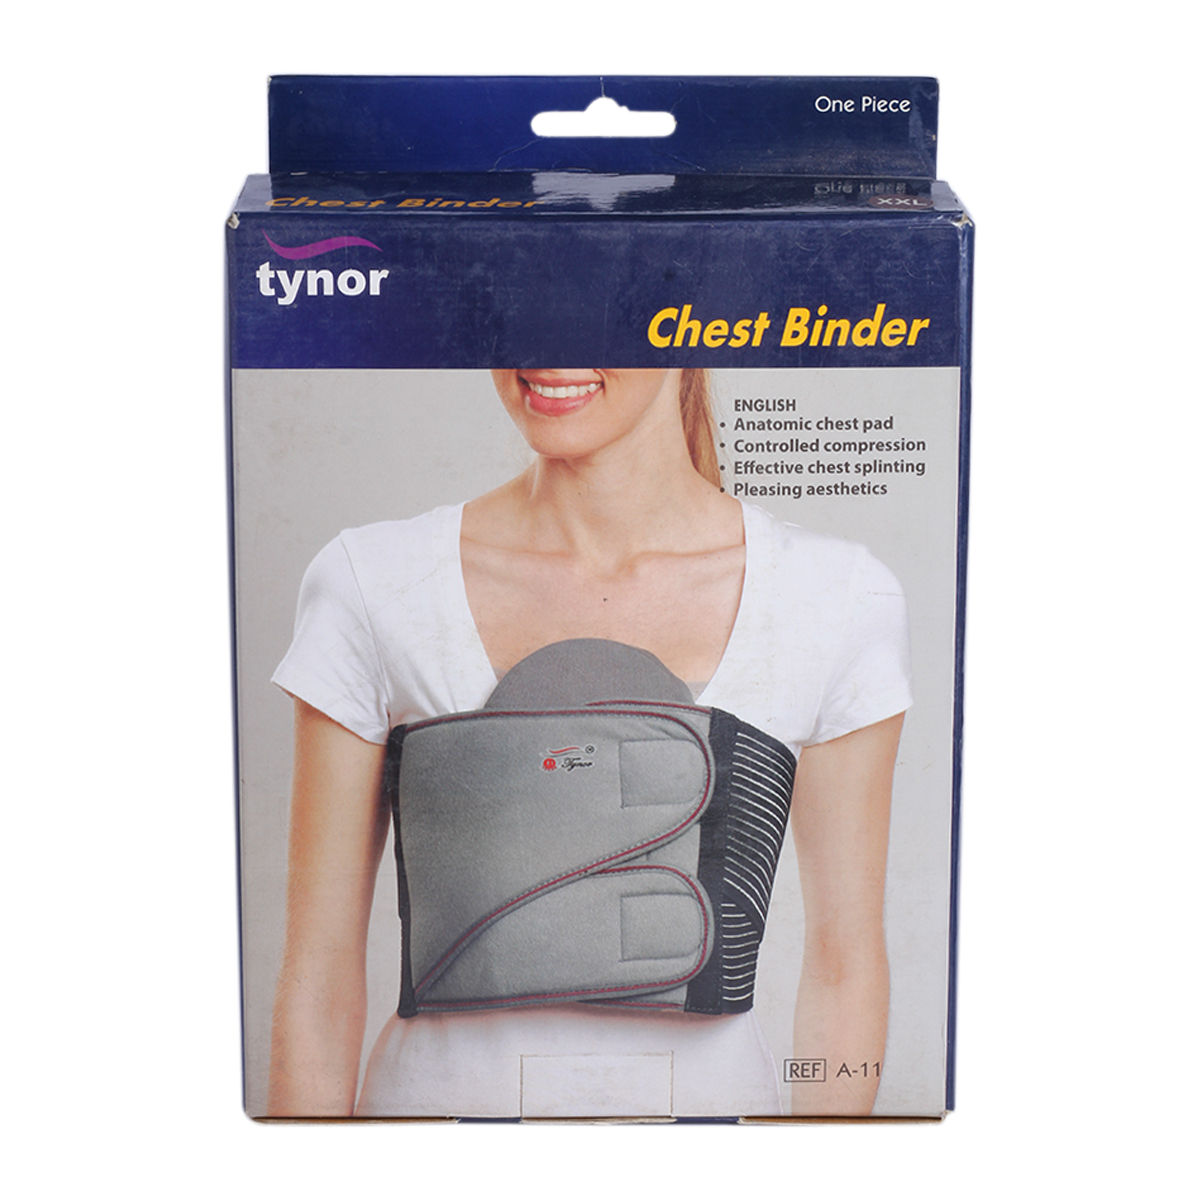 Buy Tynor Chest Binder XXL, 1 Count Online